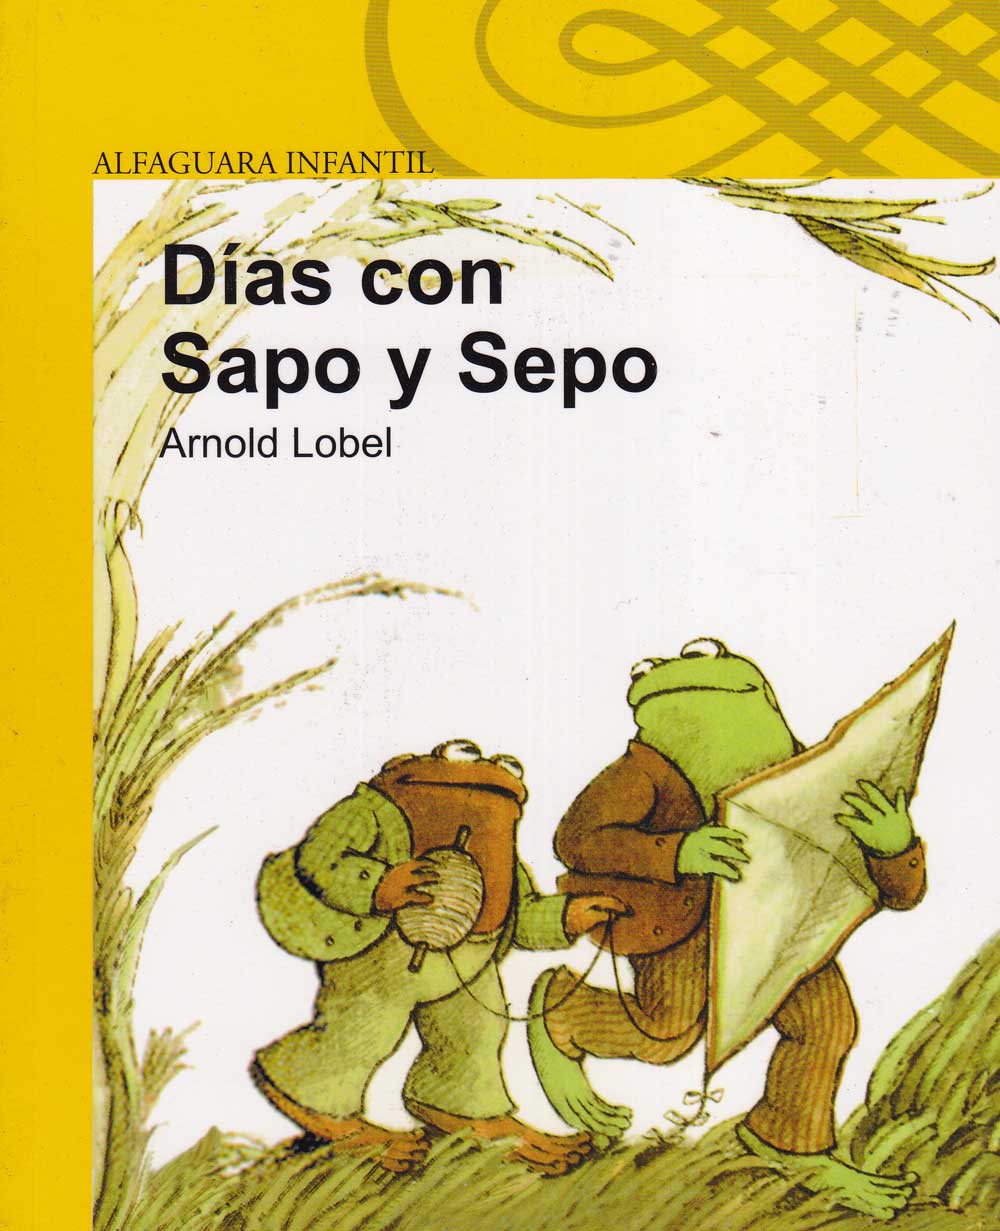 Sapo y Sepo Collection, Frog and Toad Collection, Rey Del Sol, Del Sol Books, Del Sol University